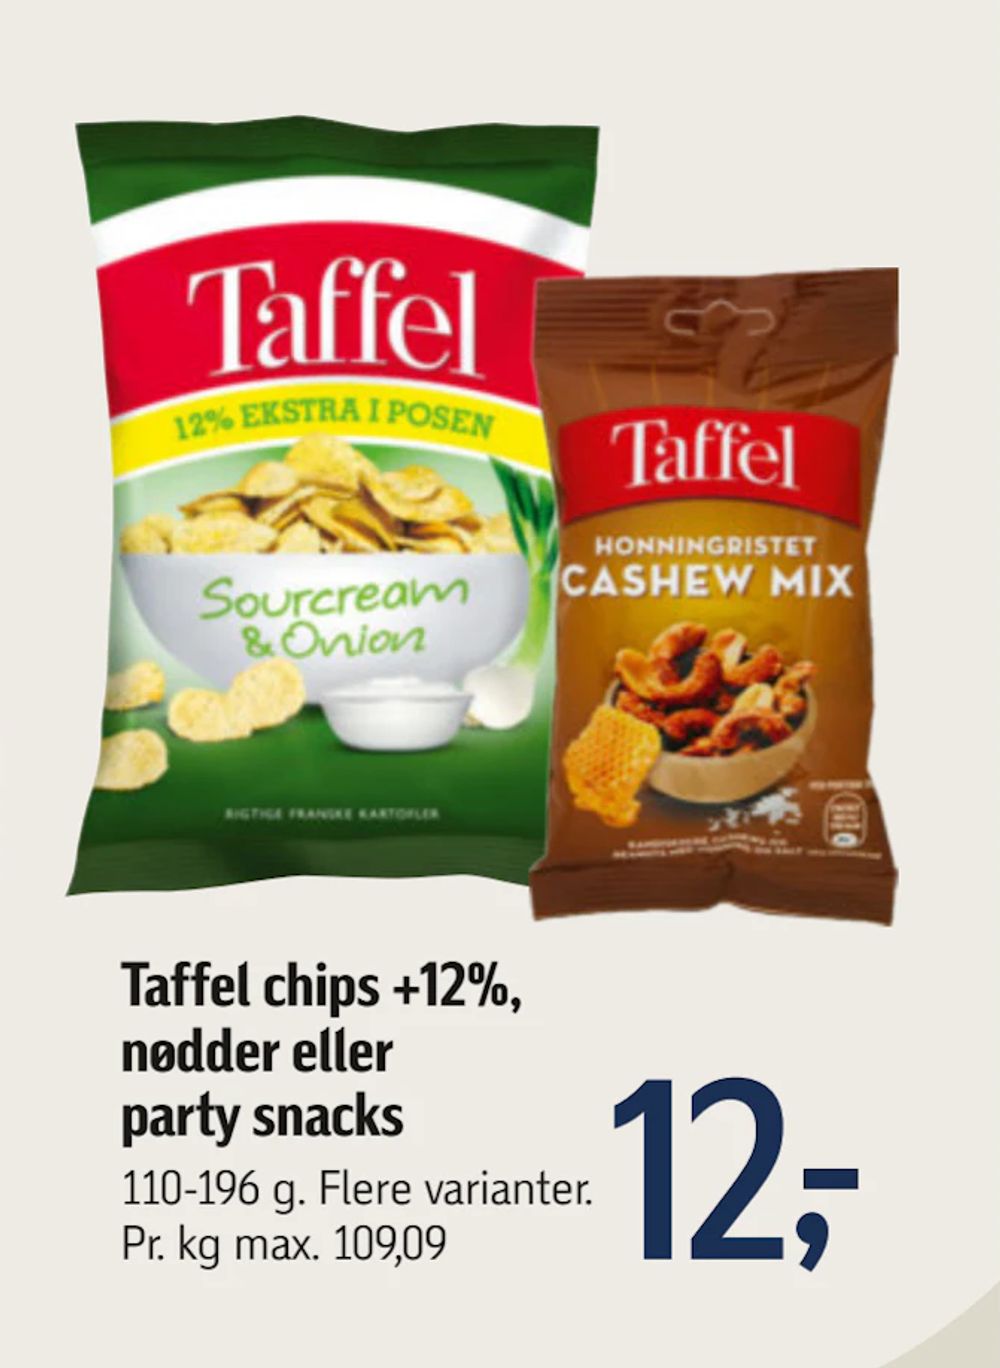 Tilbud på Taffel chips +12%, nødder eller party snacks fra føtex til 12 kr.